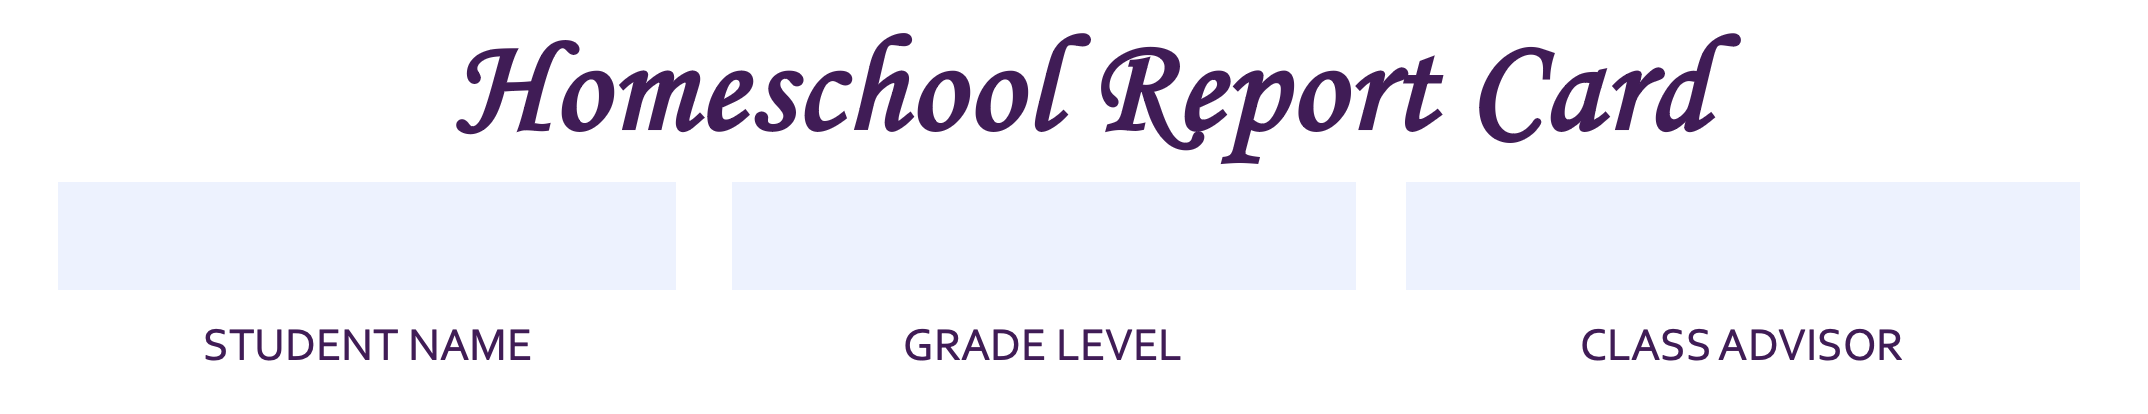 Homeschool report card 01